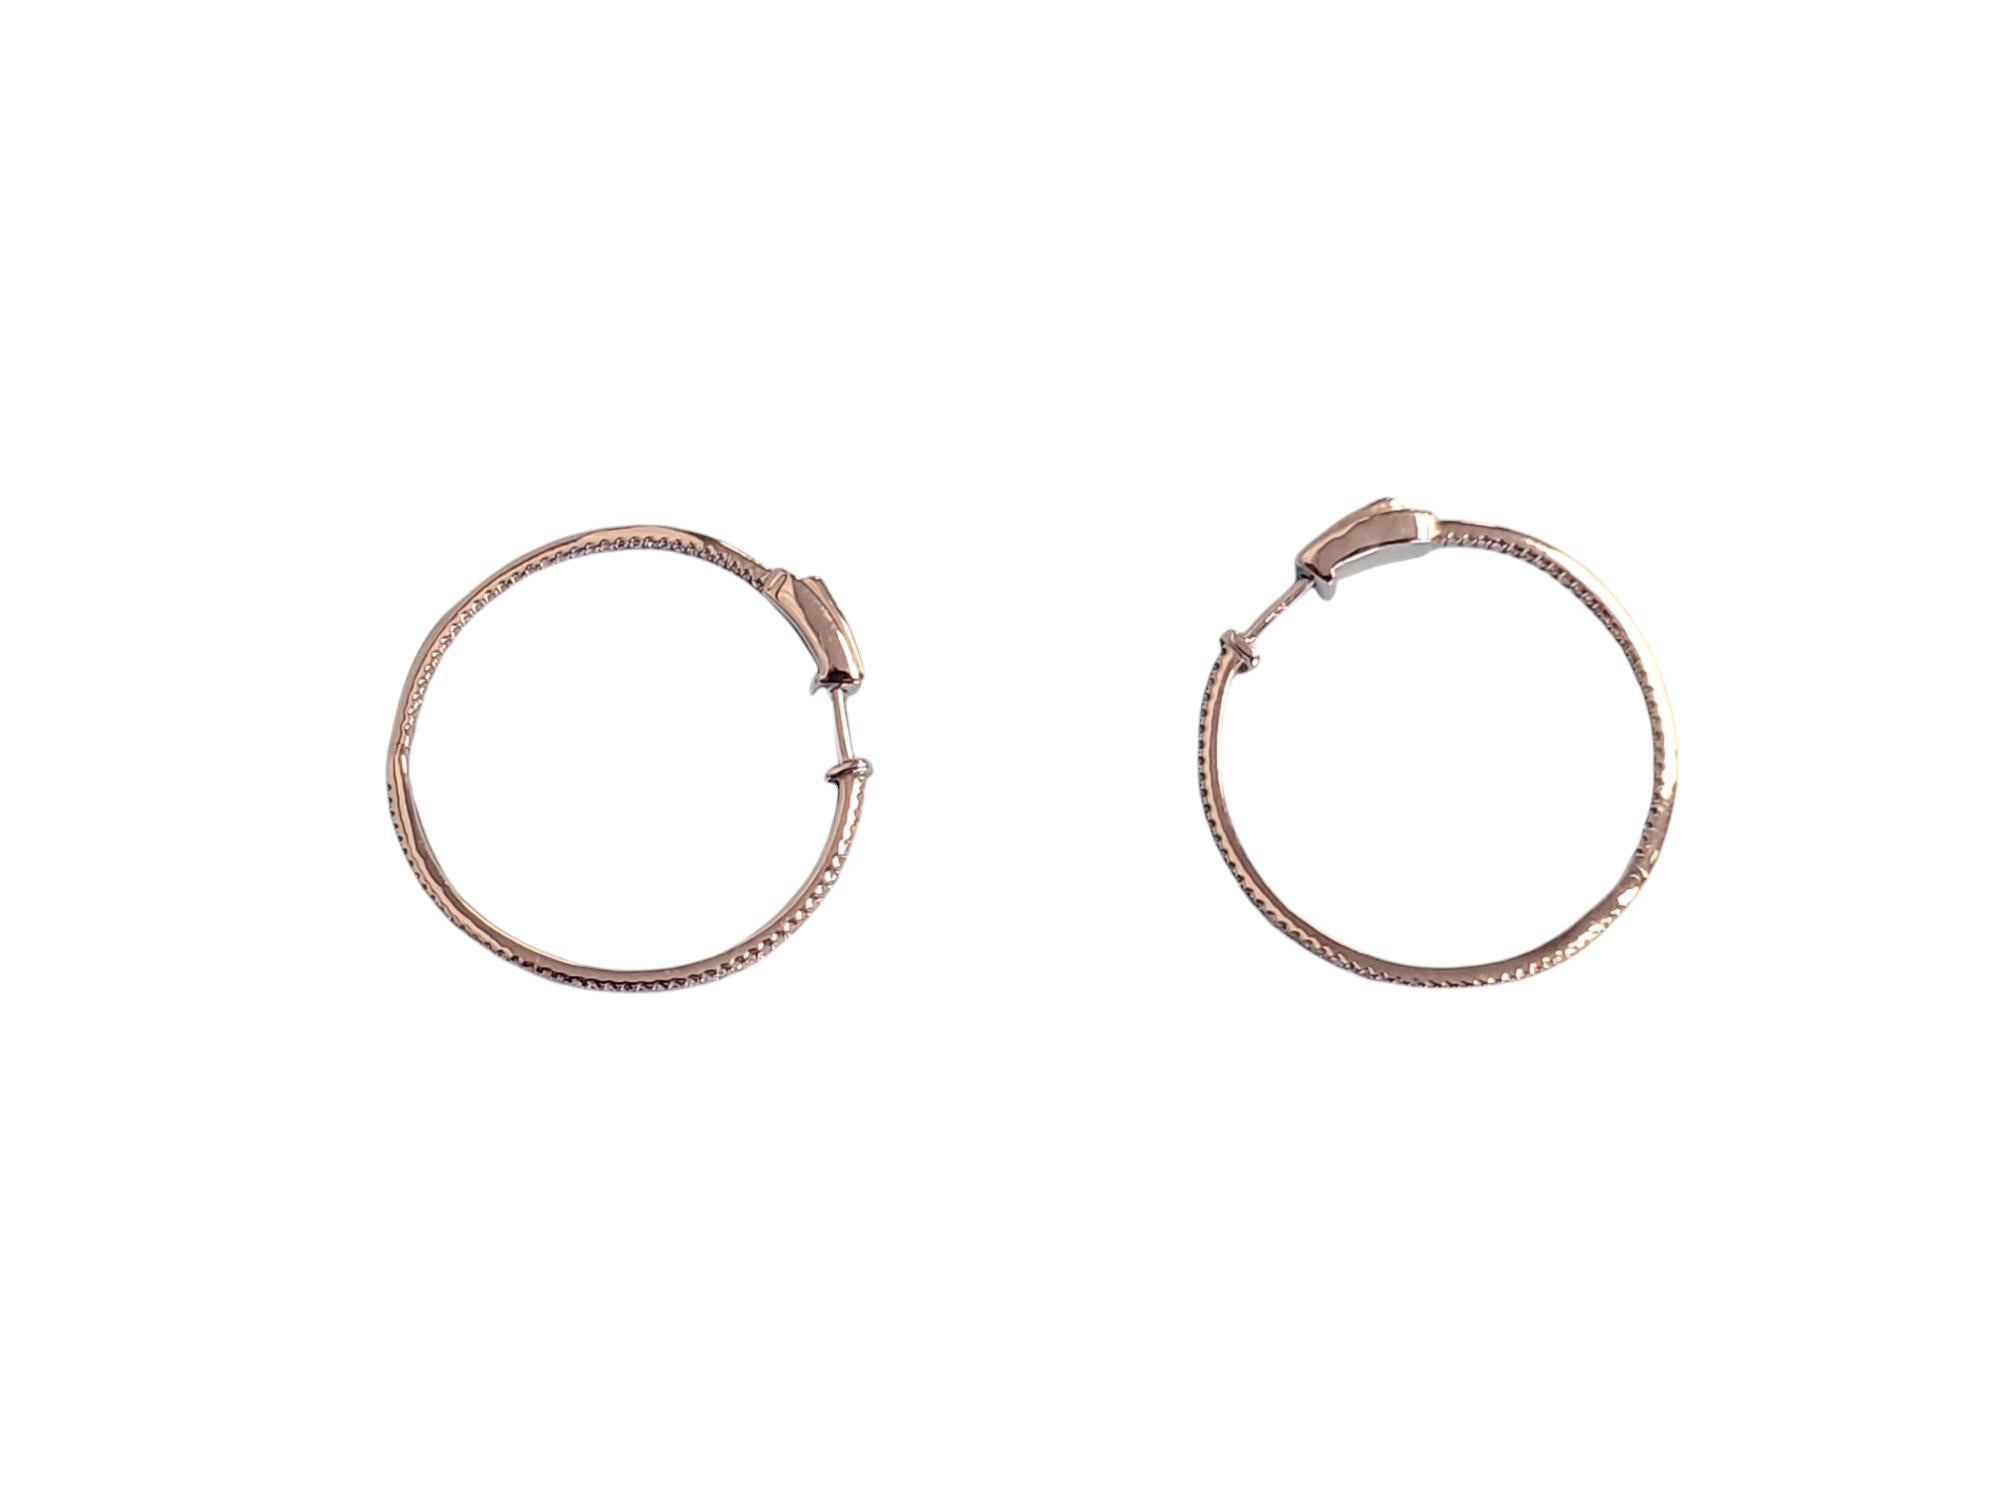 Round Cut Diamond Hoop Earrings Inside Out 10k White Gold 1.00tcw 1.5